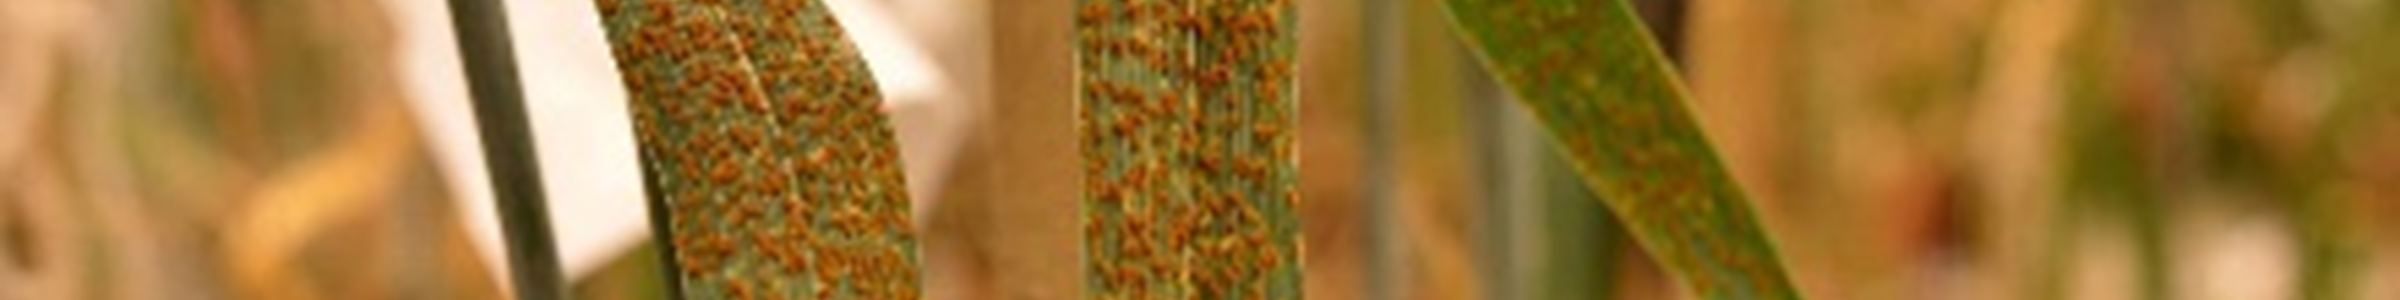 wheat-rust-banner